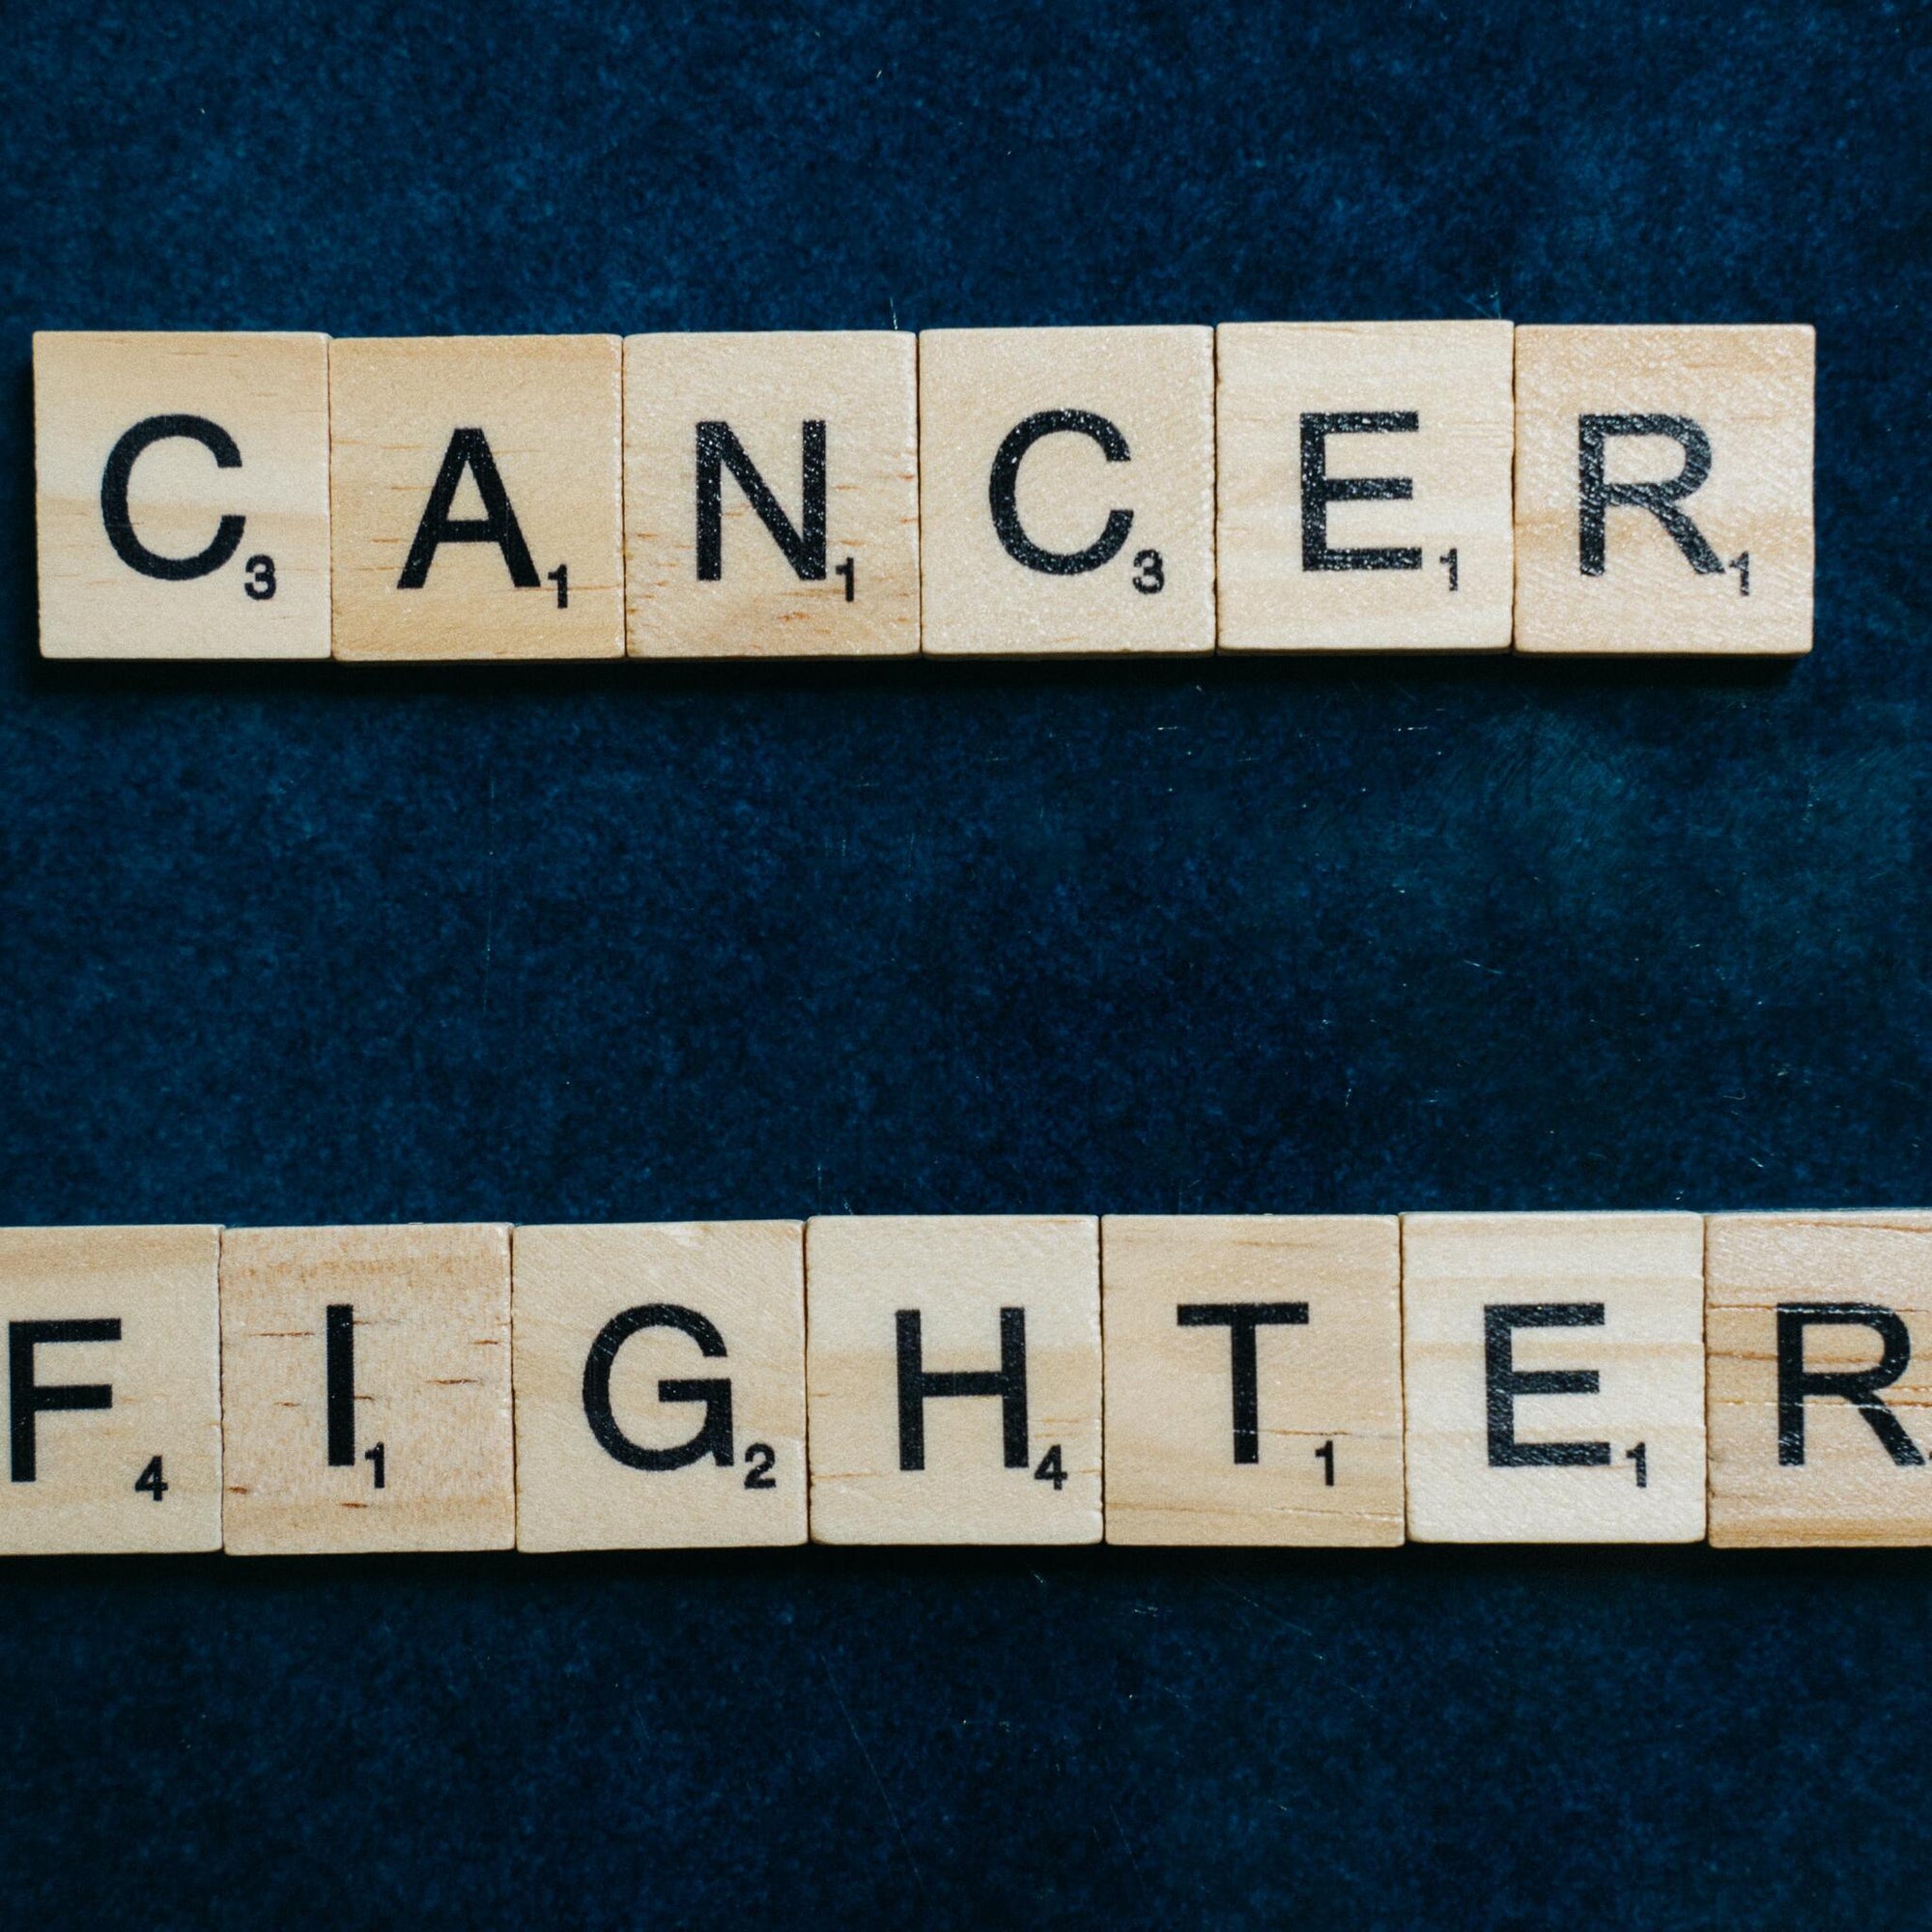 Scrabble tiles that spell "Cancer Fighter"